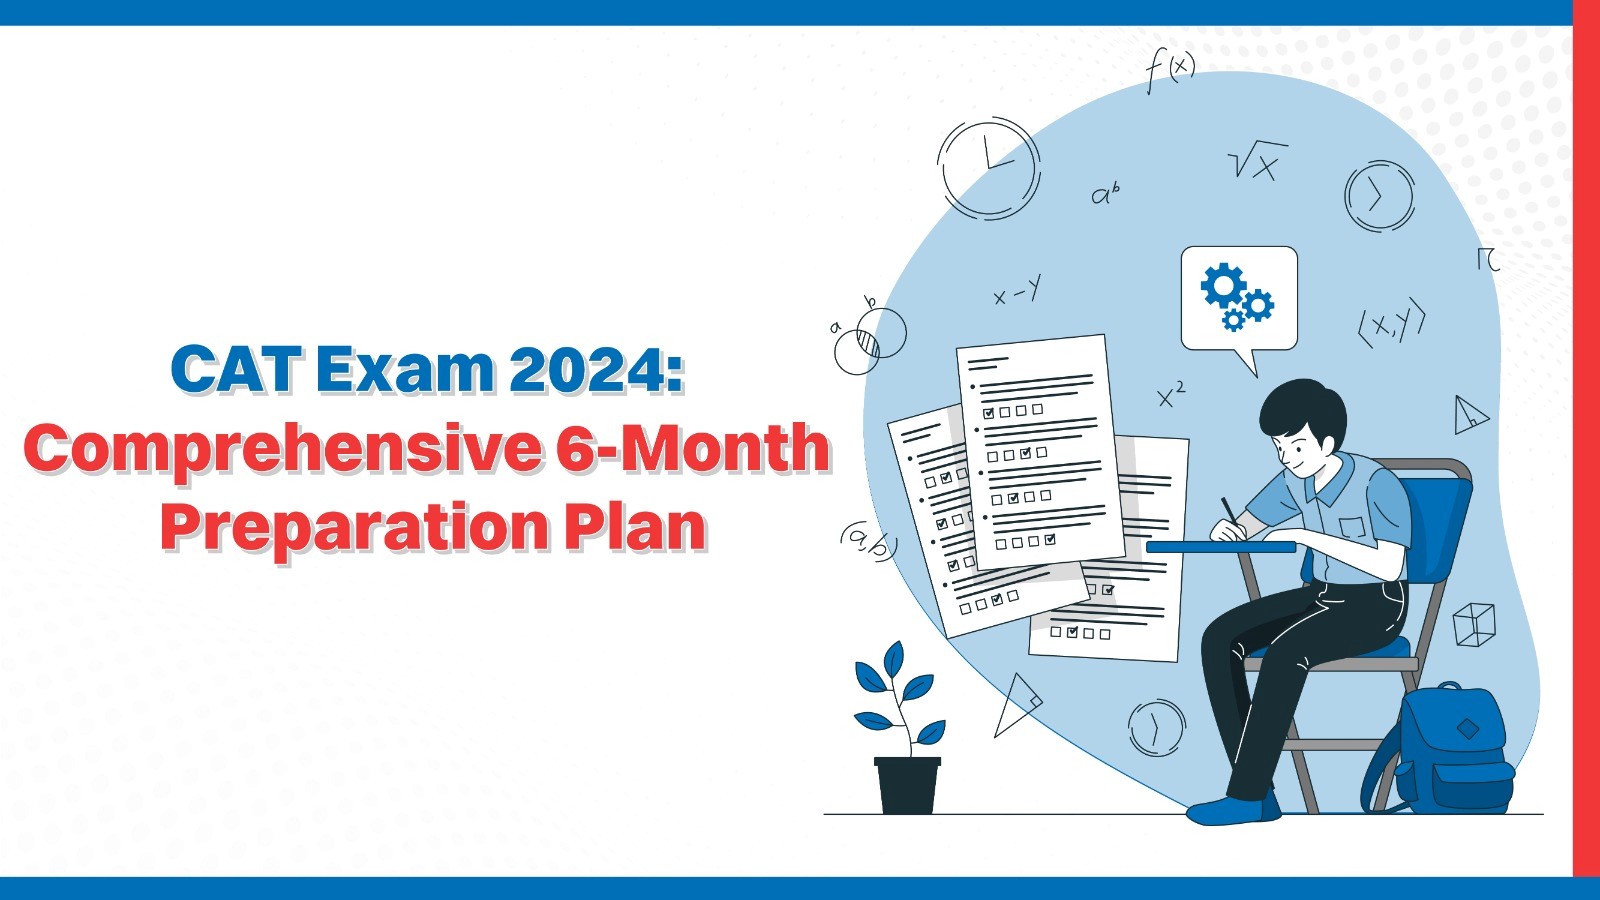 CAT Exam 2024 Comprehensive 6-Month Preparation Plan.jpg